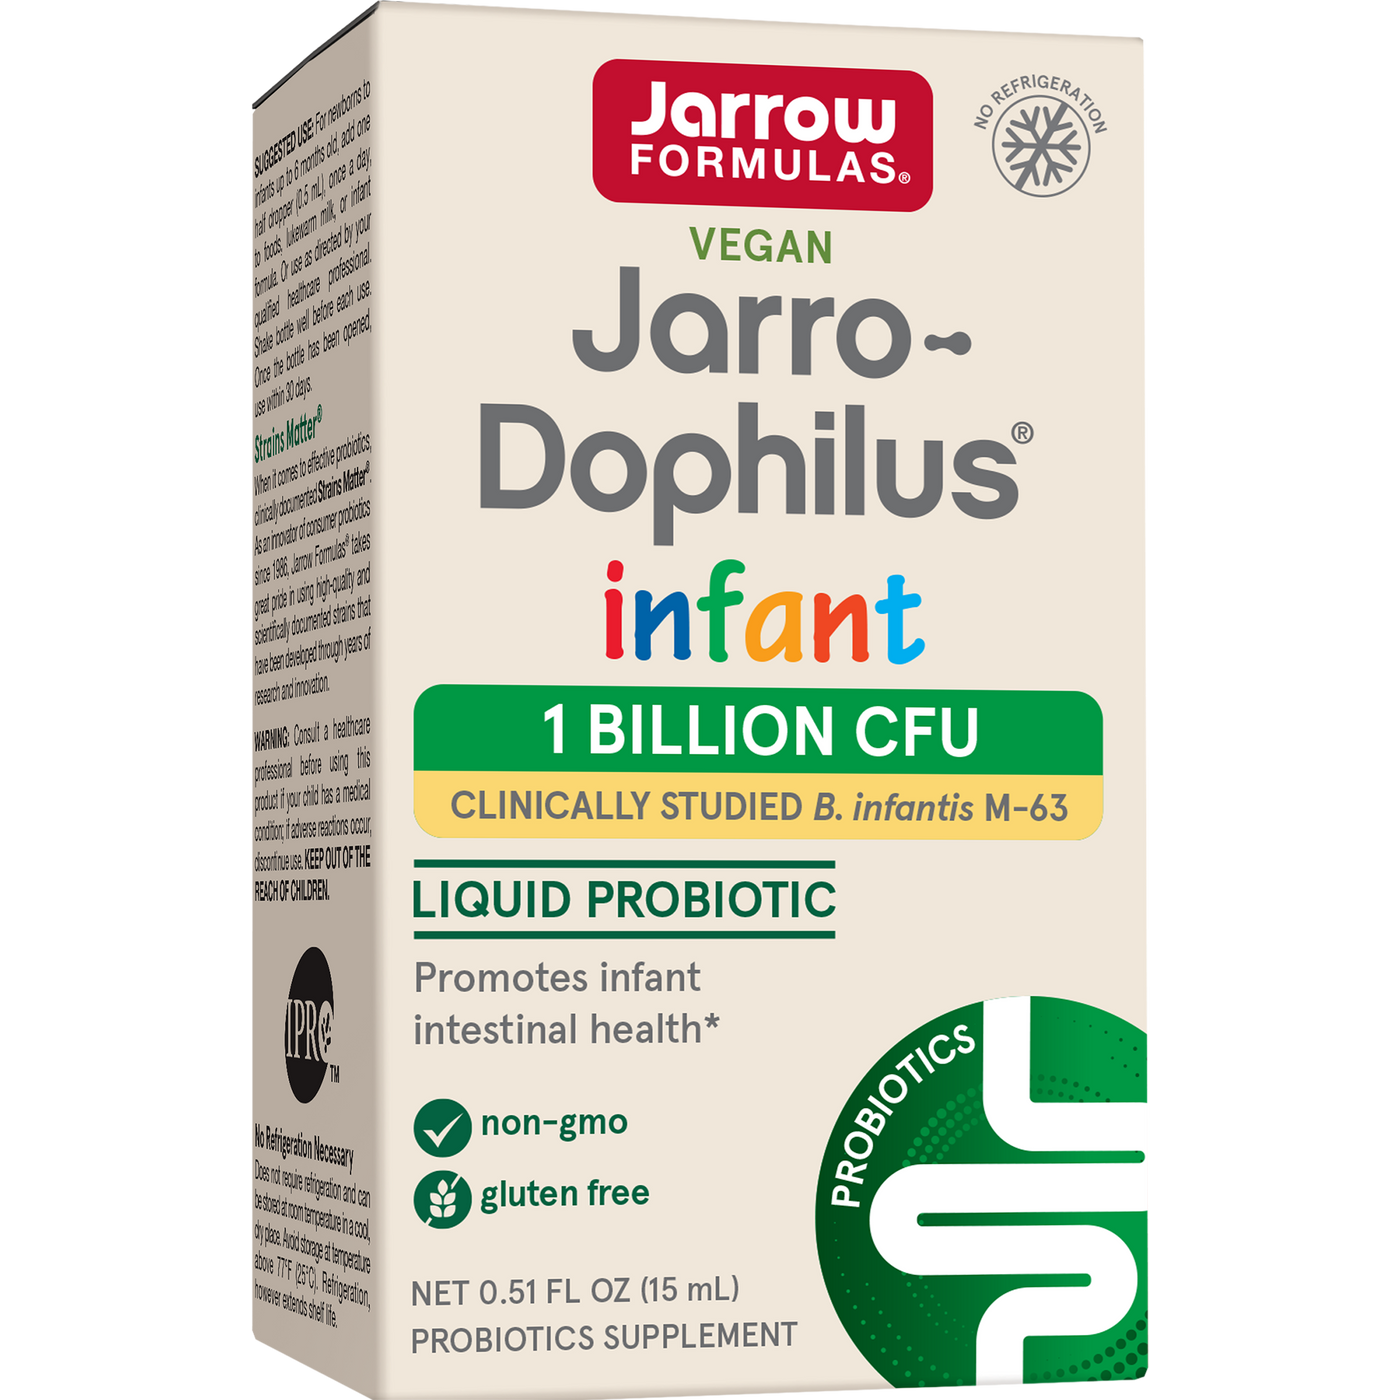 Jarro-Dophilus Infant ings Curated Wellness